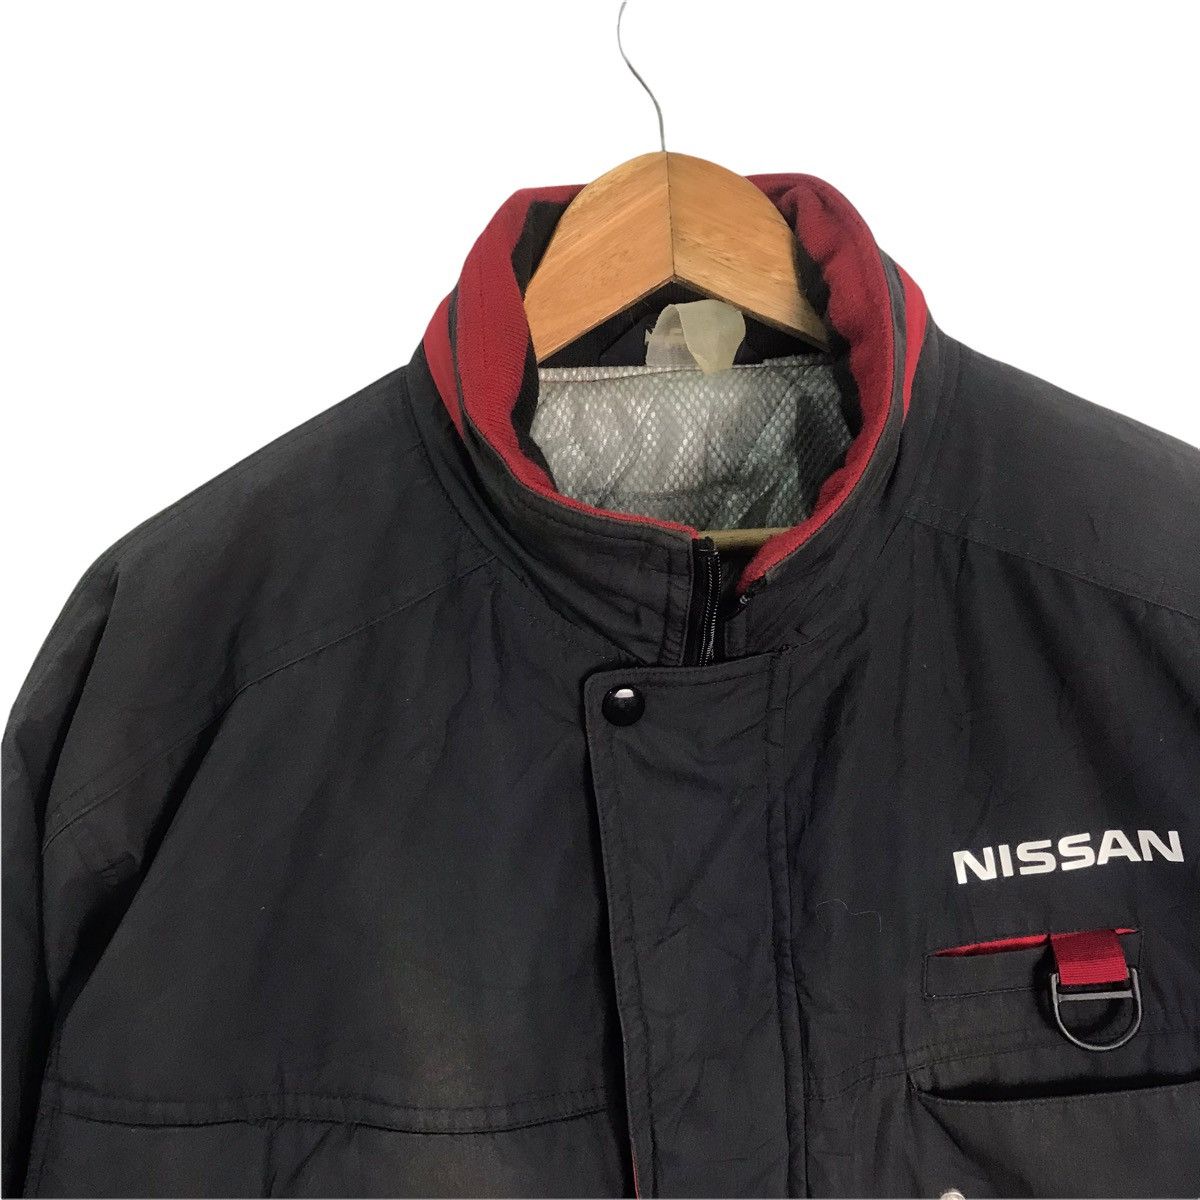 Sports Specialties - Vintage nissan Motorsport bomber jacket japan - 4